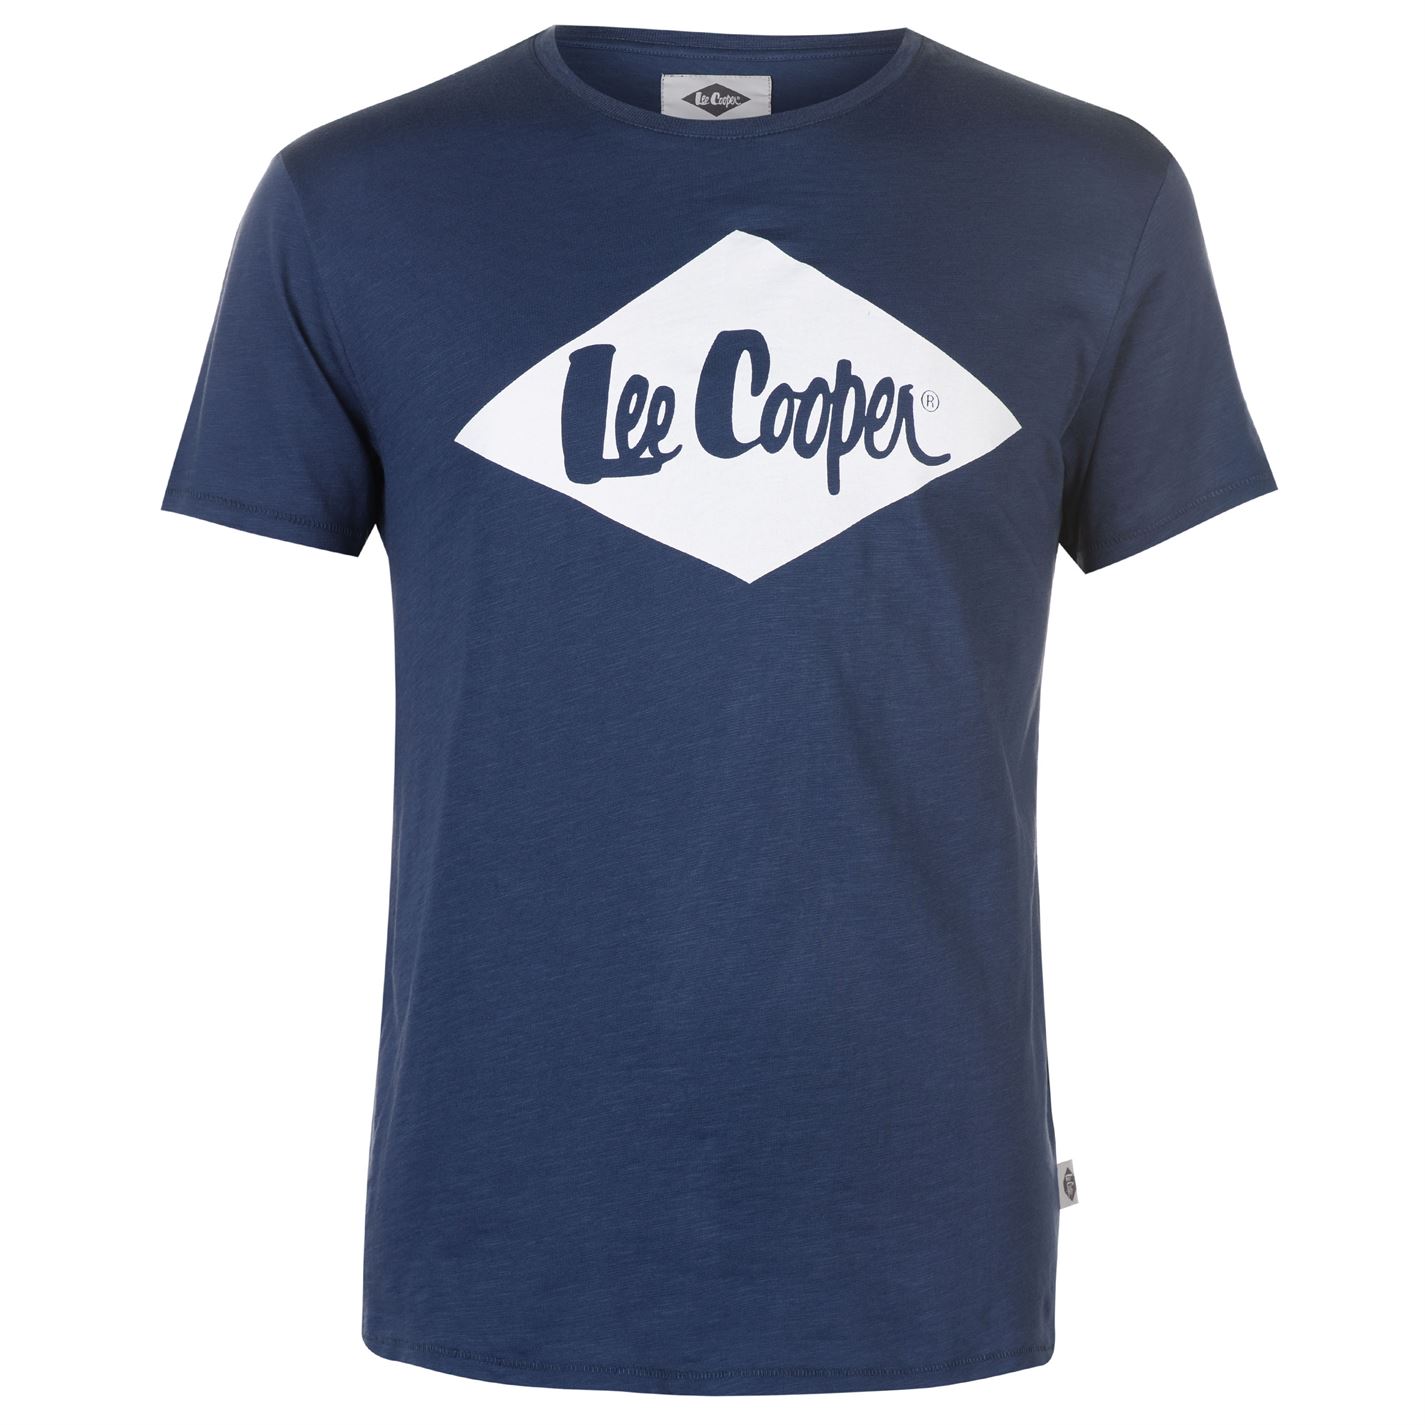 Lee Cooper Diamond T Shirt